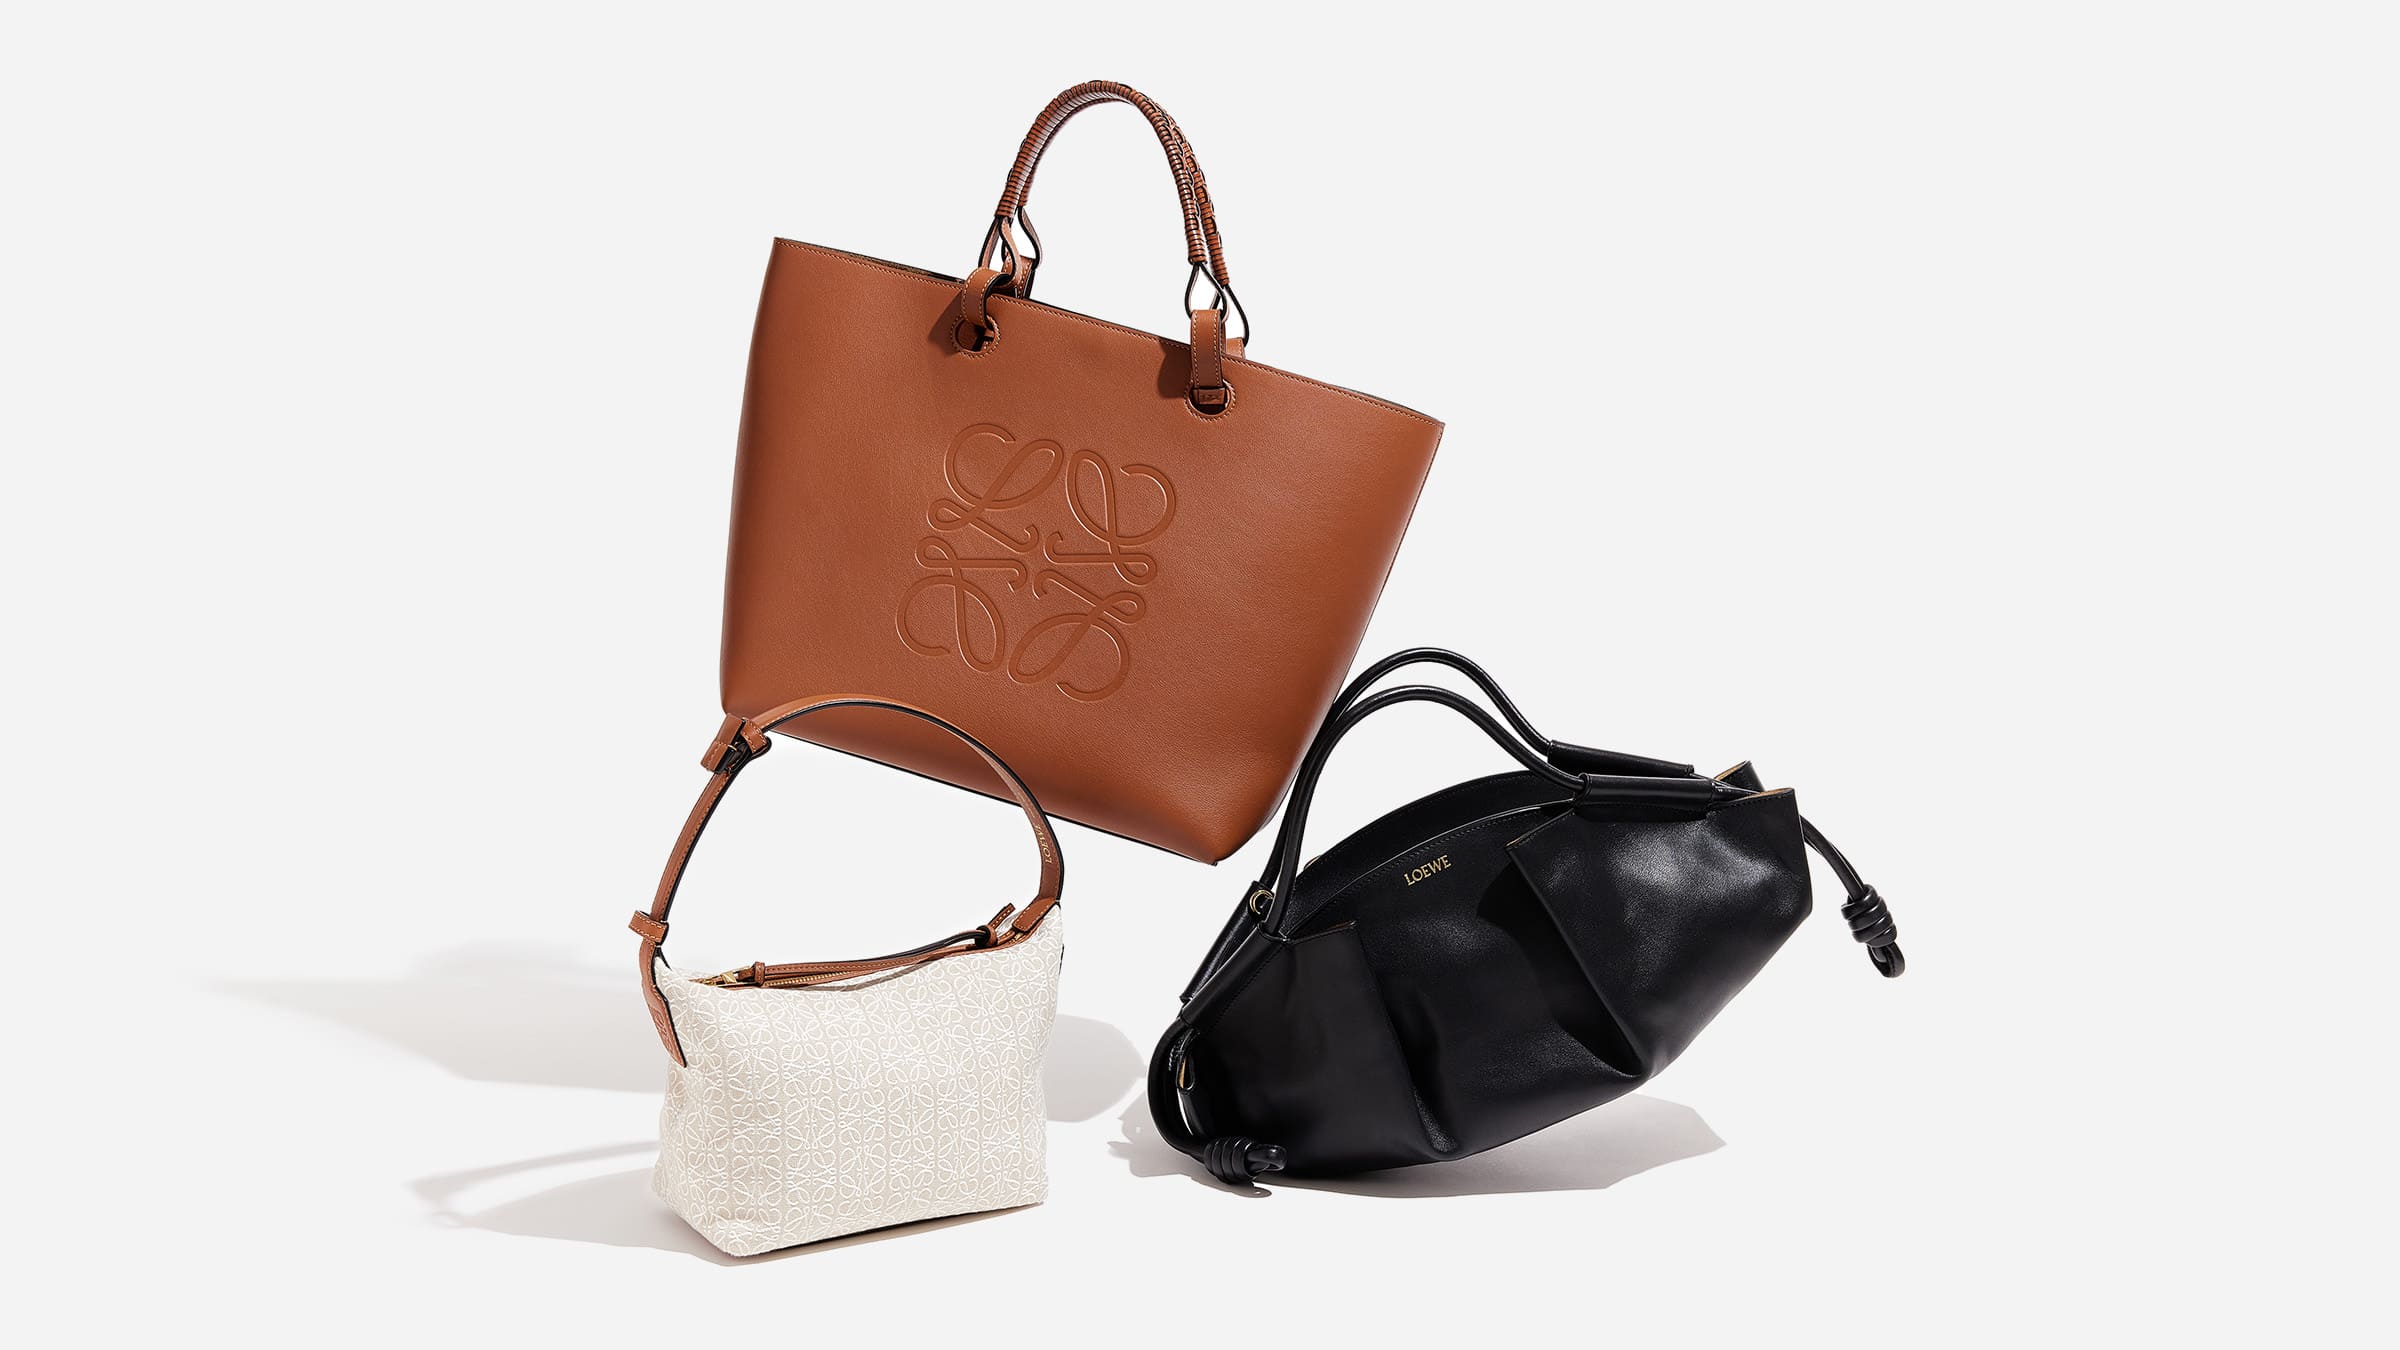 Thoughts on the loewe bracelet bag? : r/handbags